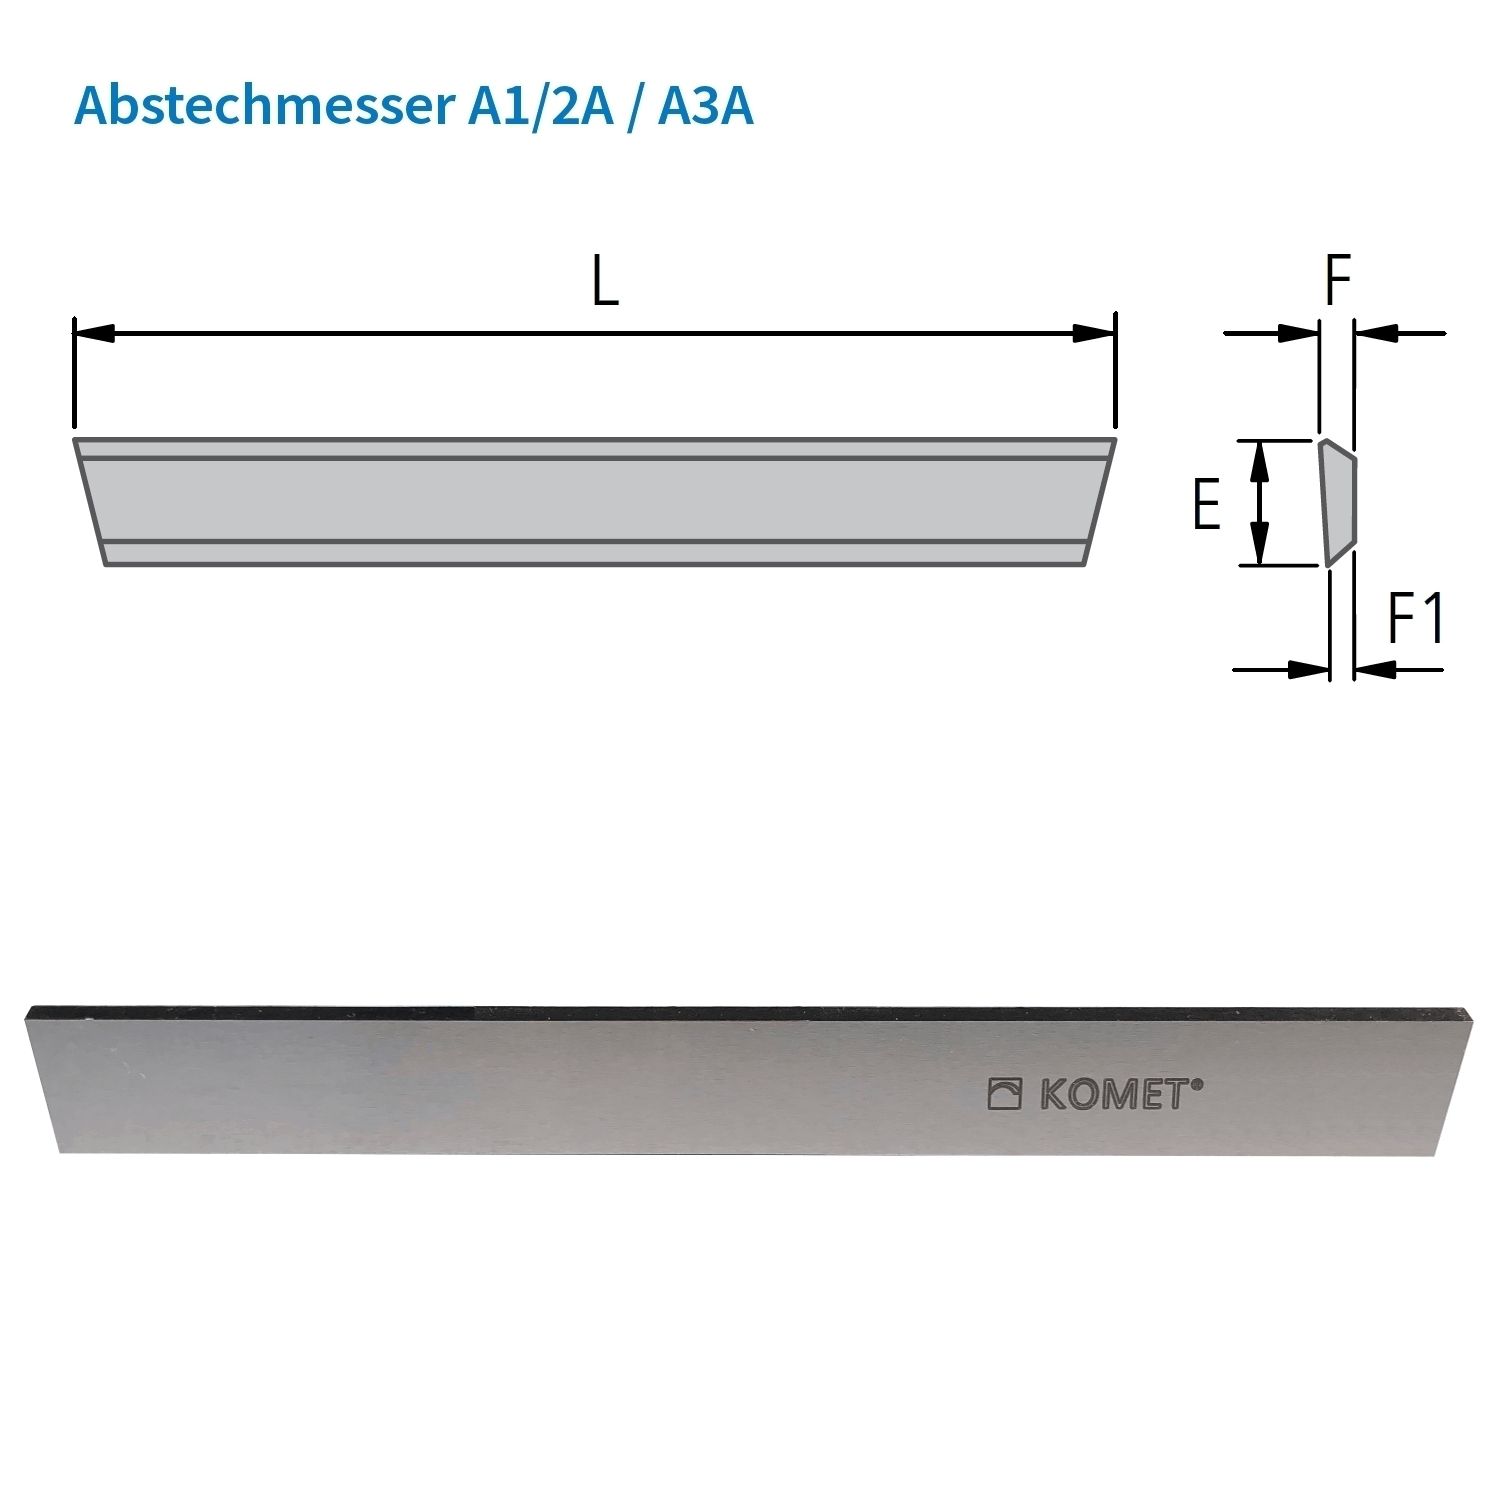 KOMET Abstechmesser A3A für Abstechhalter C